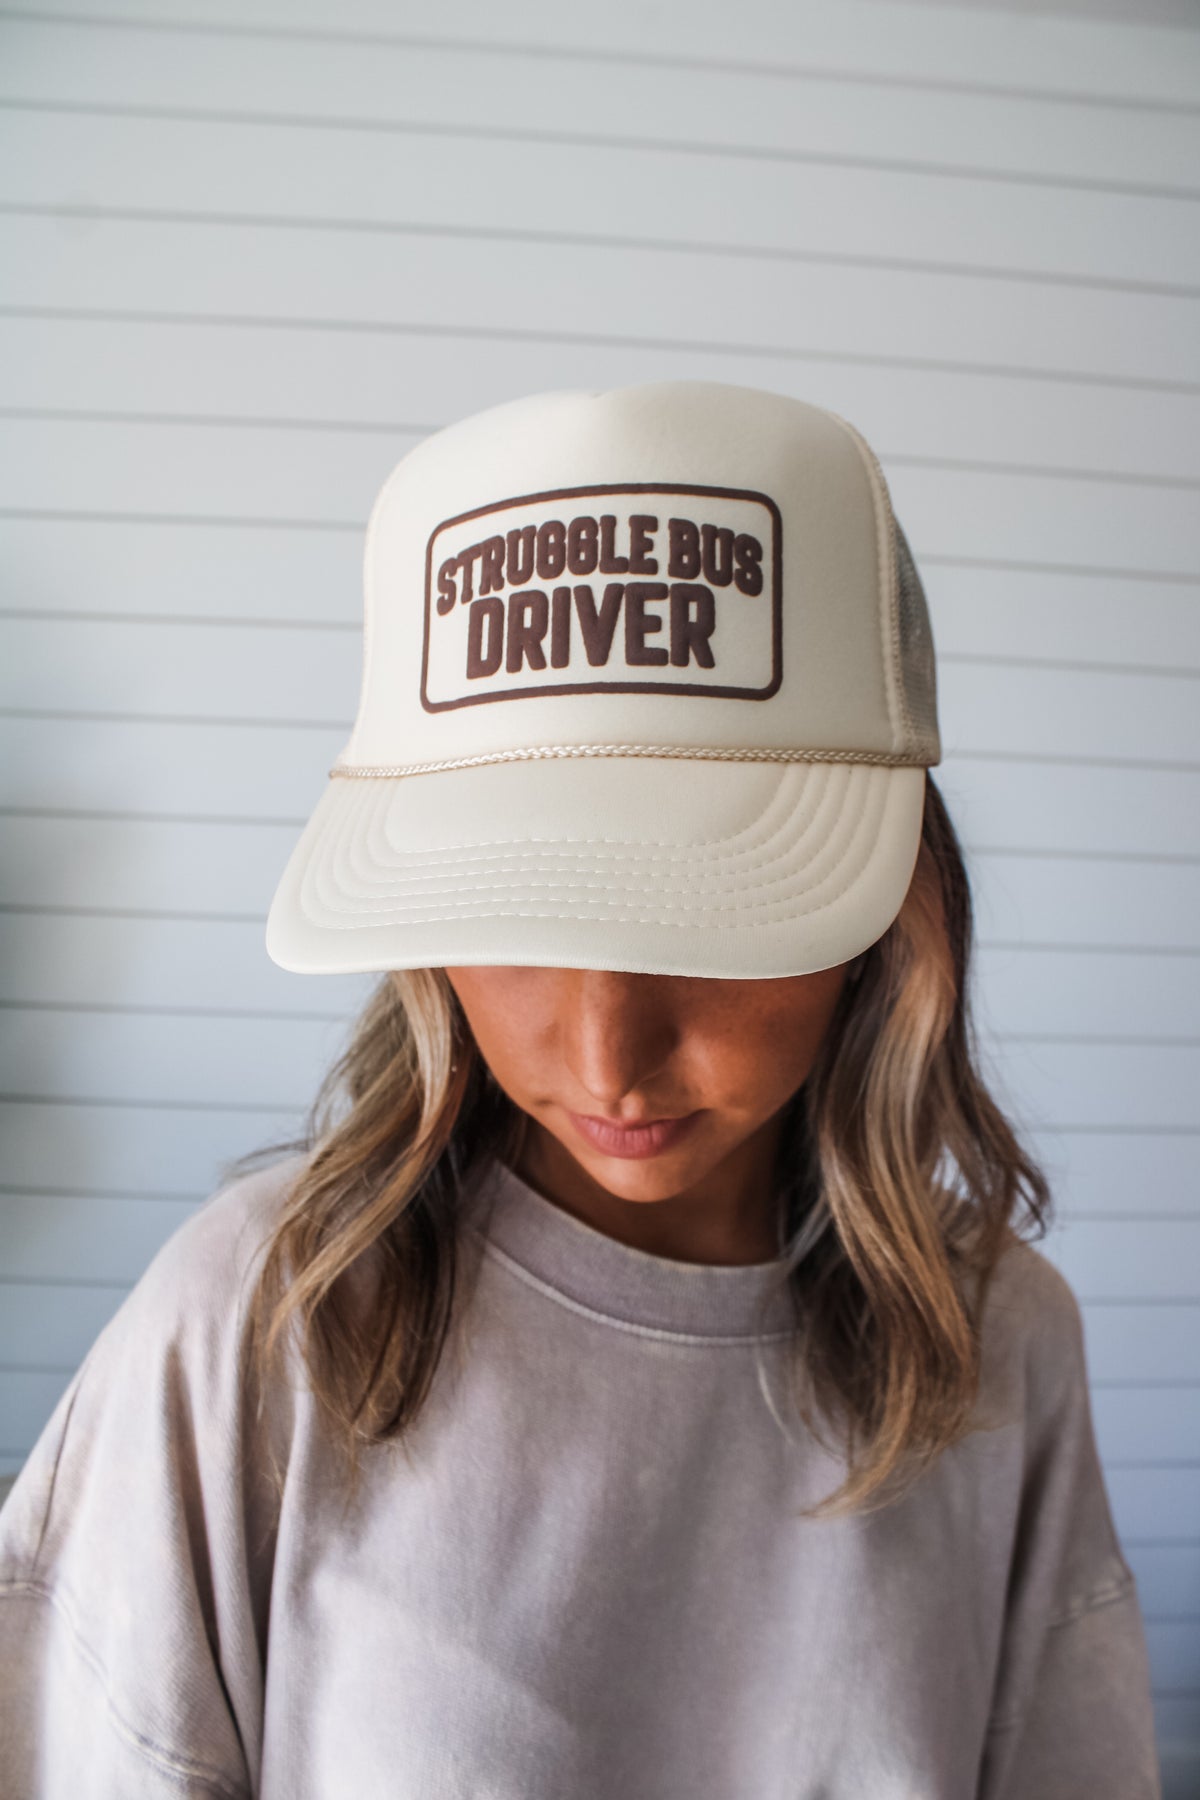 Struggle Bus Driver Trucker Hat